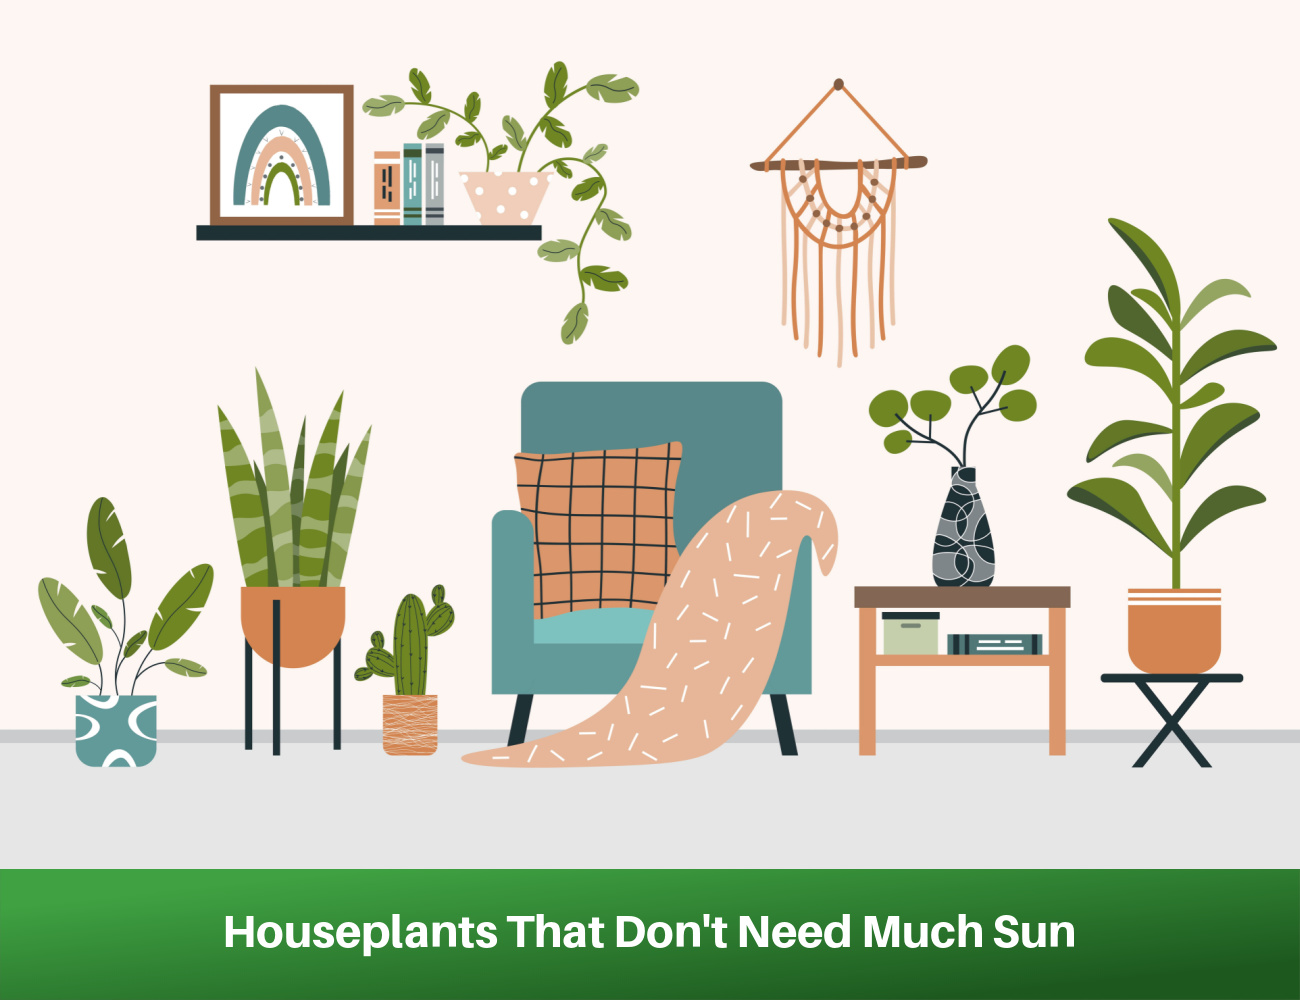 Houseplants Don't Need Much Sun